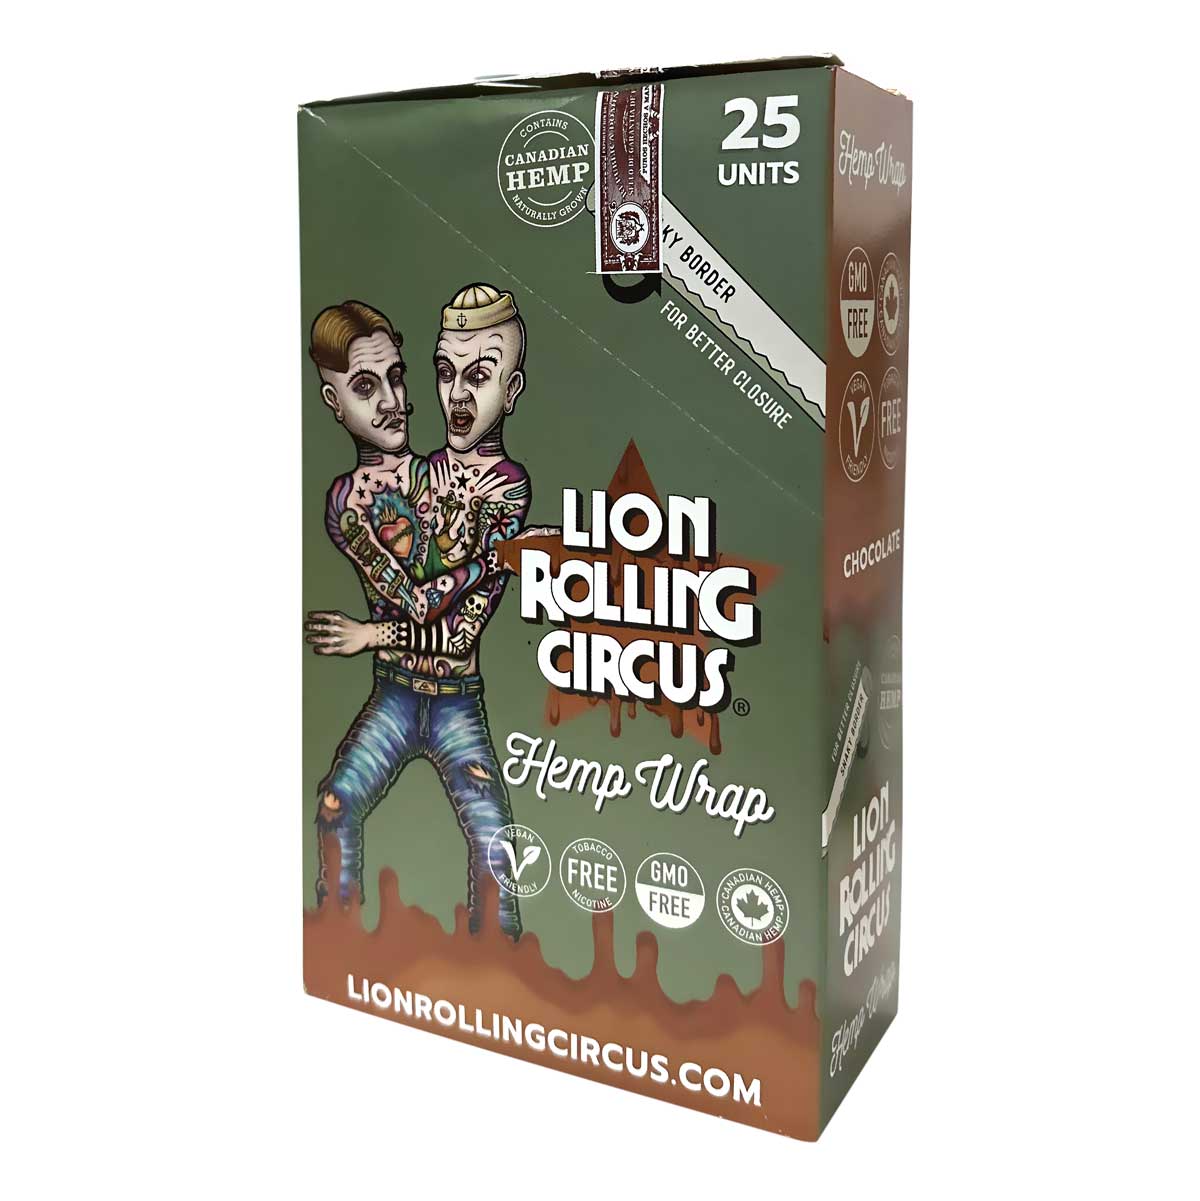 Lion Rolling Circus Hemp Wraps - Chocolate Flavor